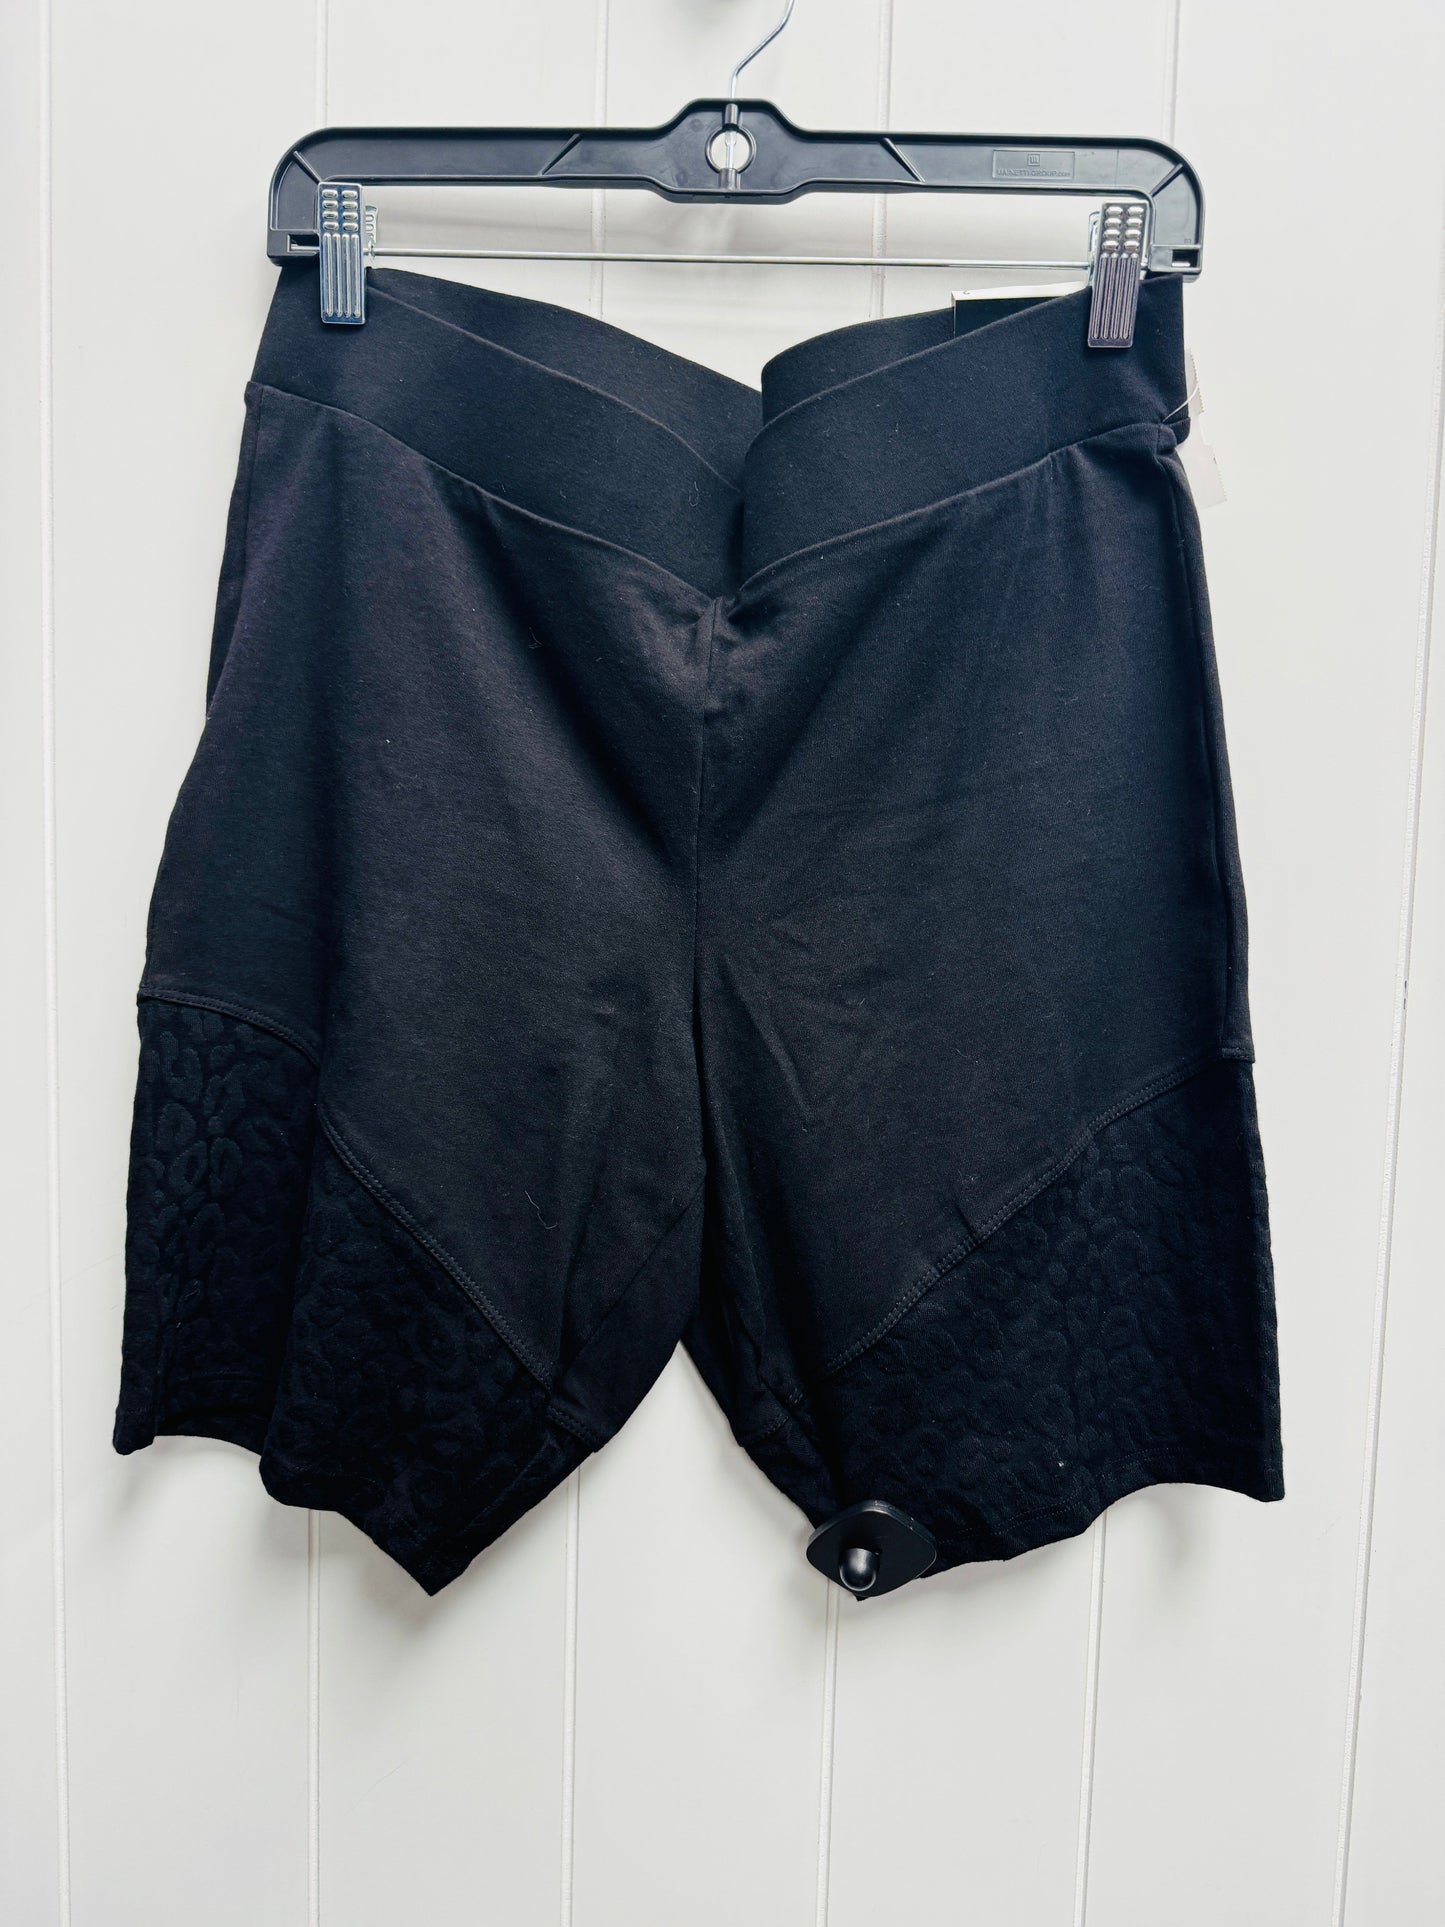 Black Shorts Torrid, Size 2x